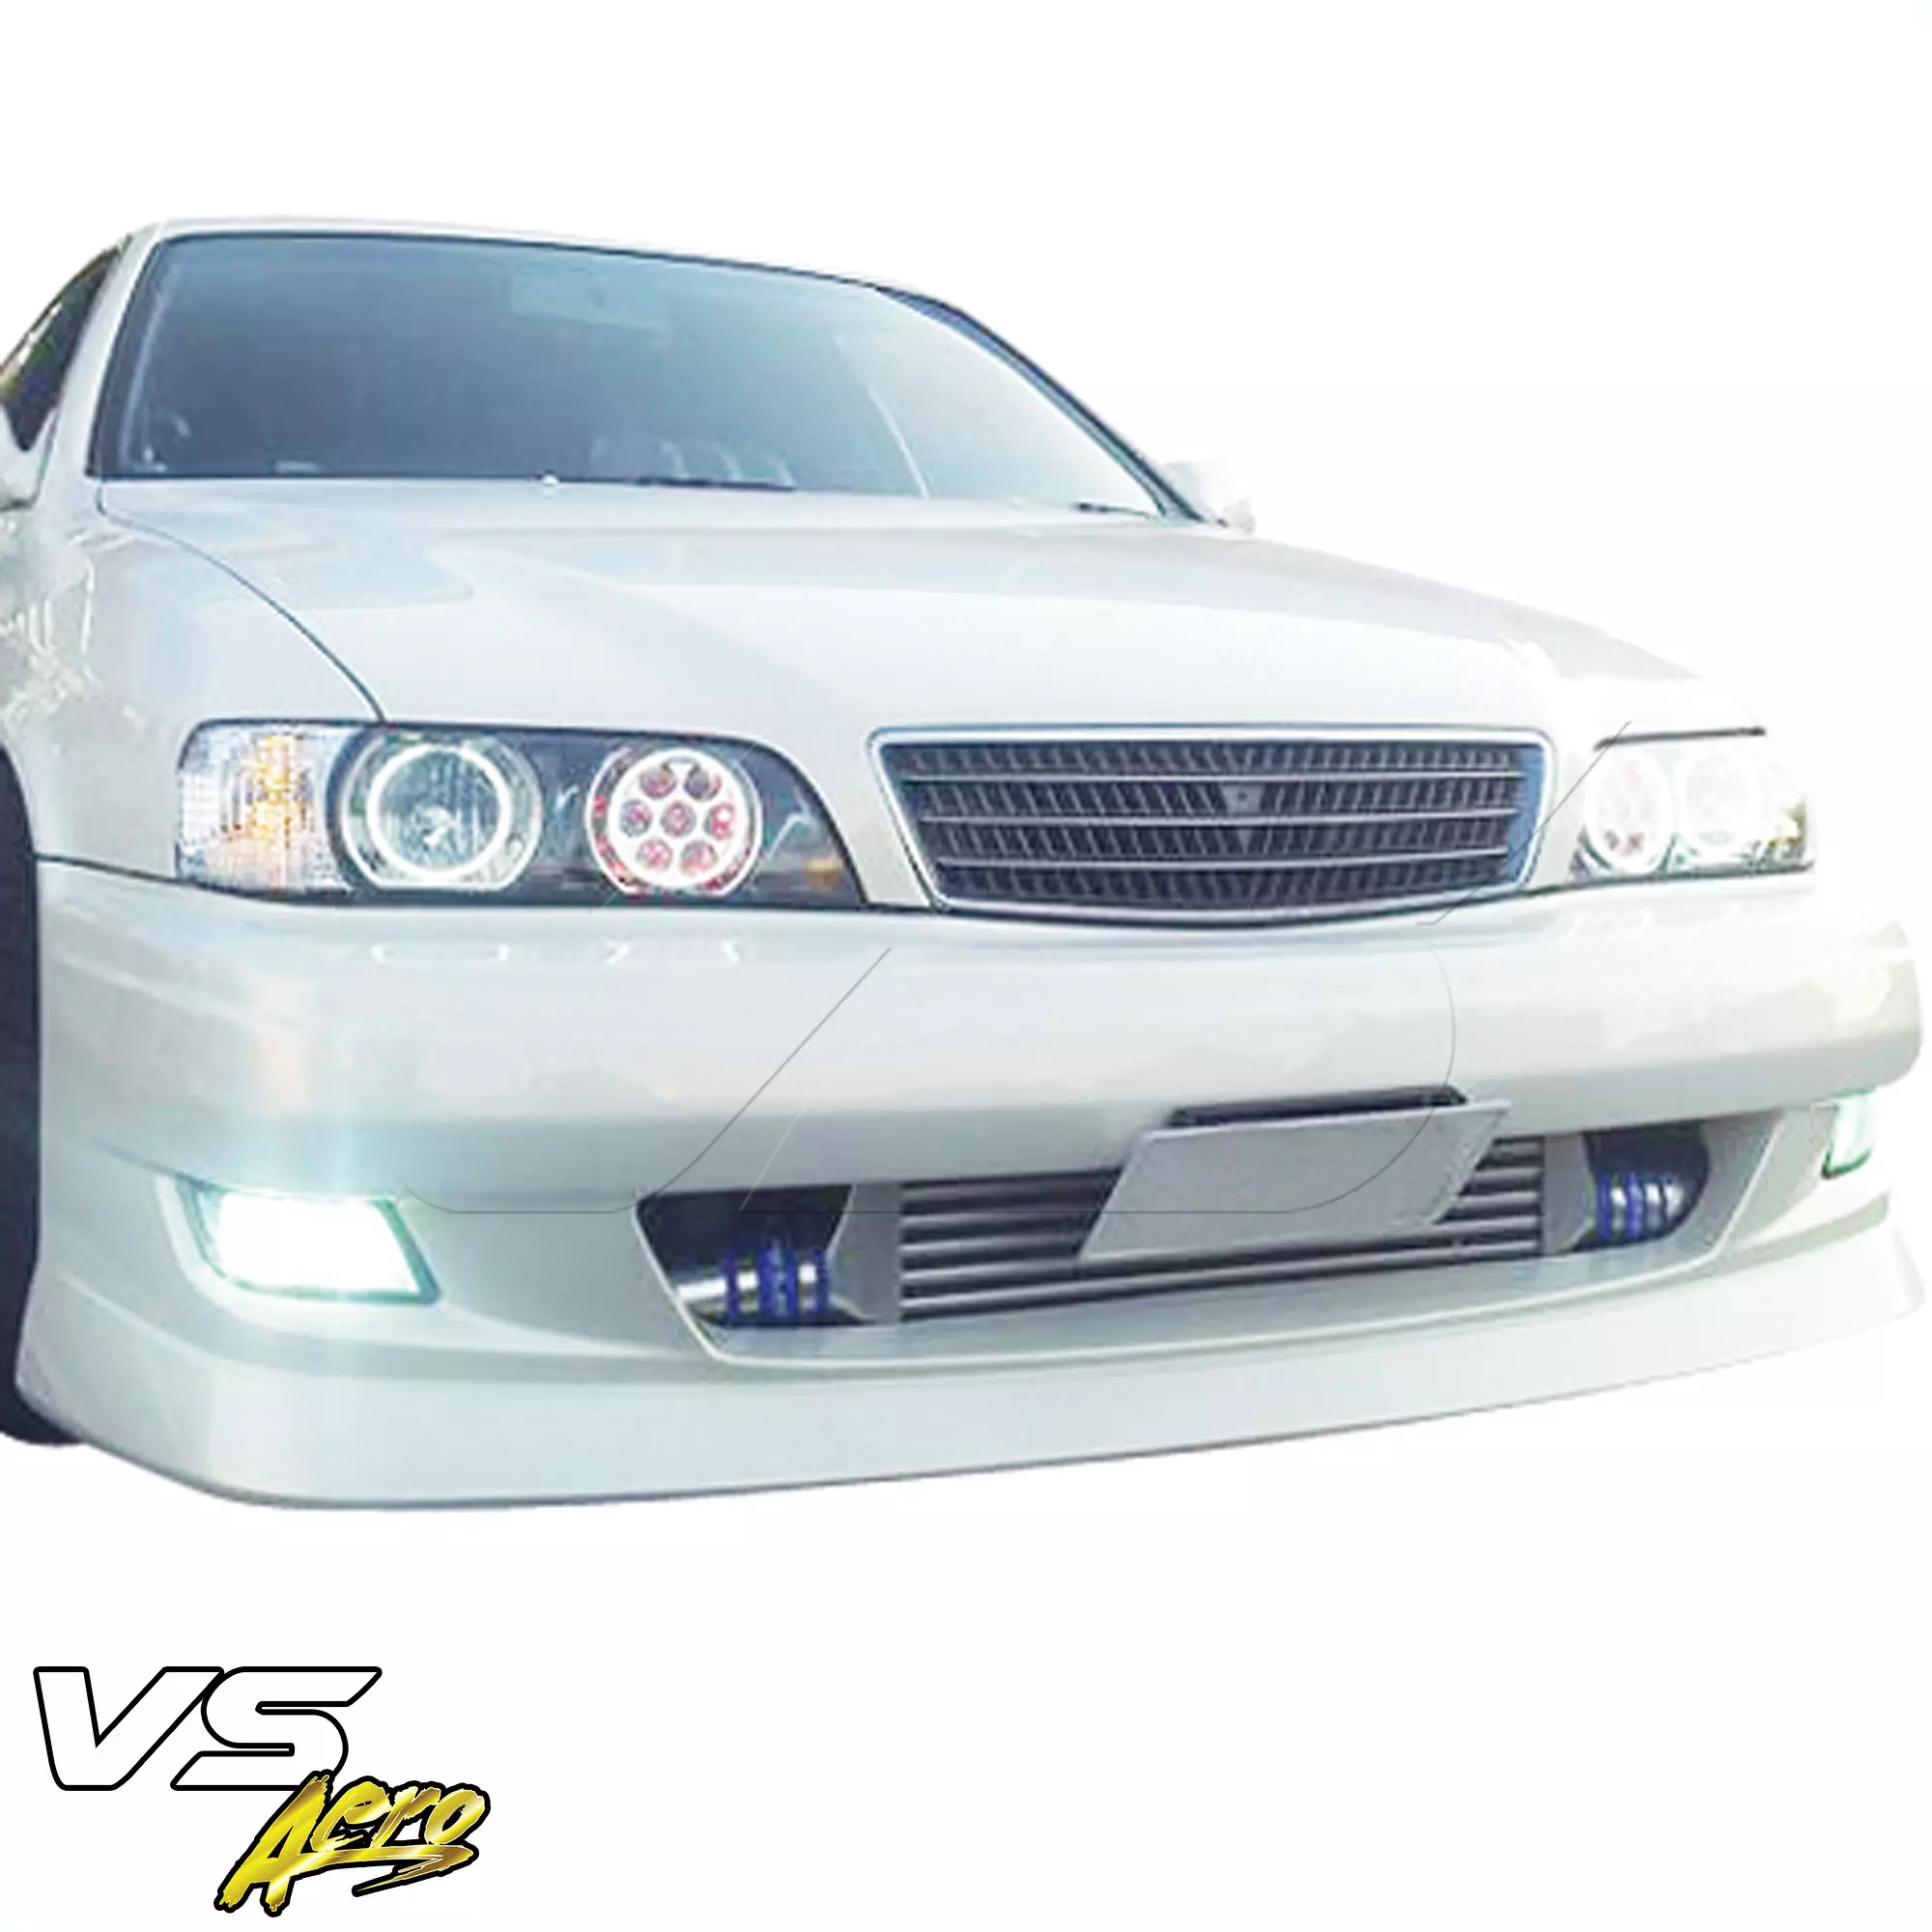 VSaero FRP URA vL Body Kit 4pc > Toyota Chaser JZX100 1996-2000 - Image 9